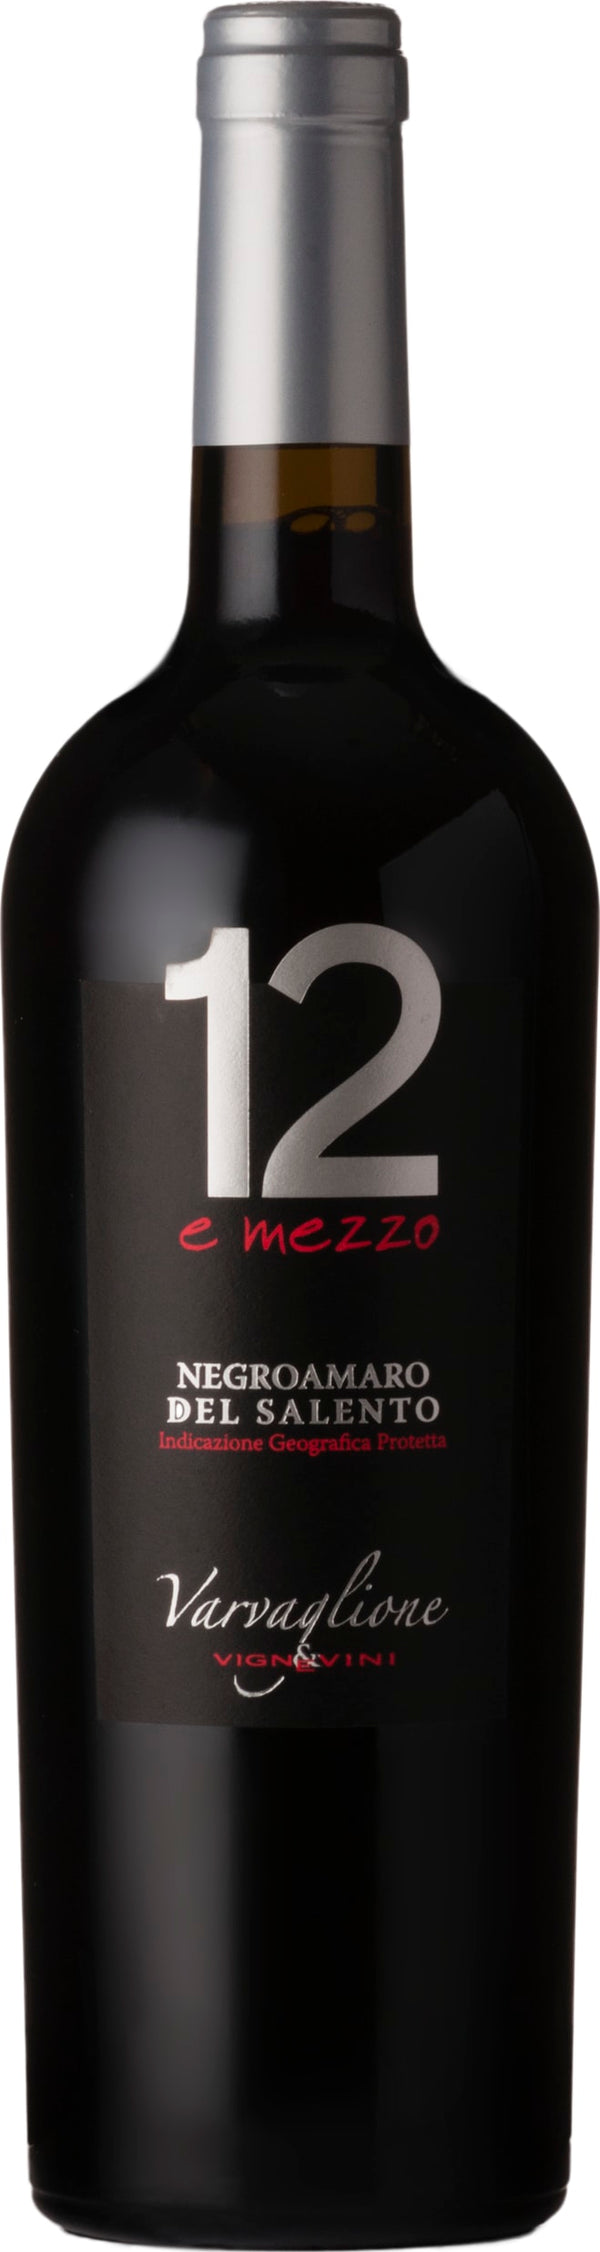 Varvaglione Negroamaro del Salento 2021 6x75cl - Just Wines 